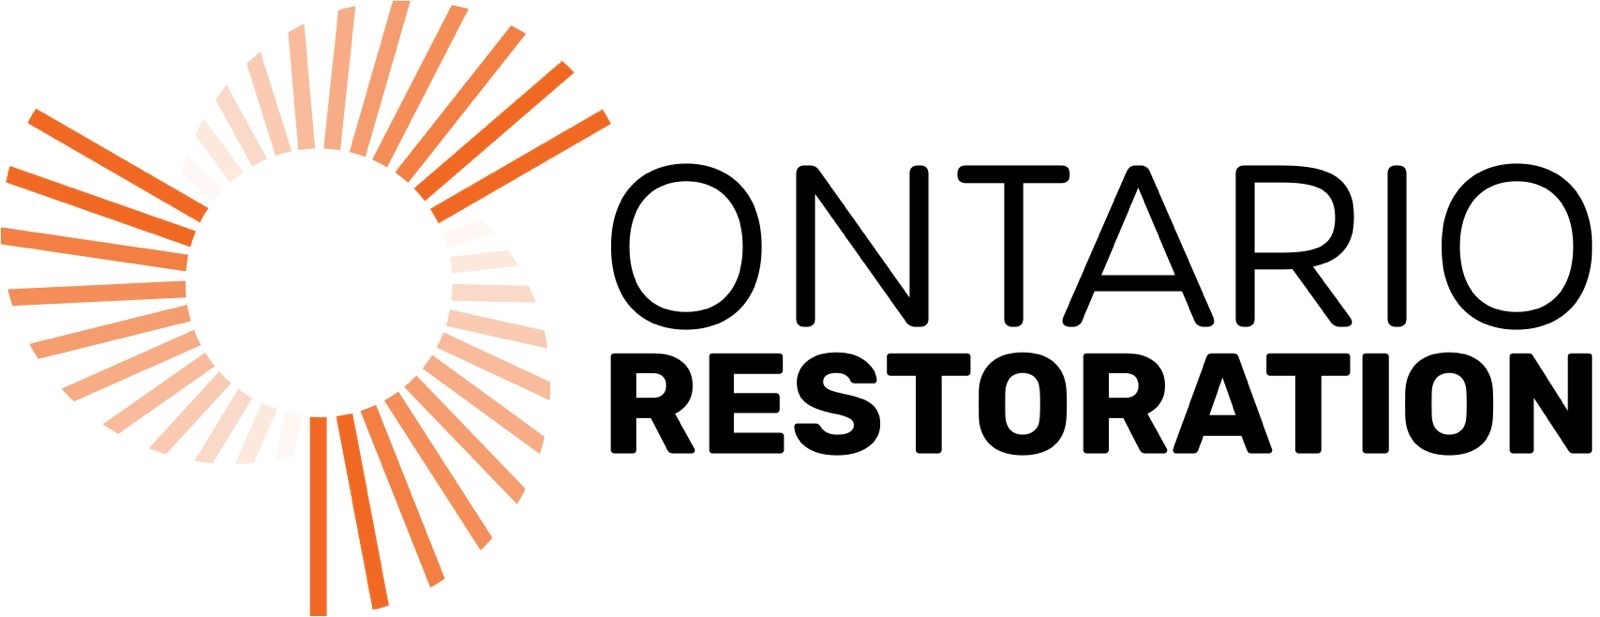 Ontario Restoration's logo